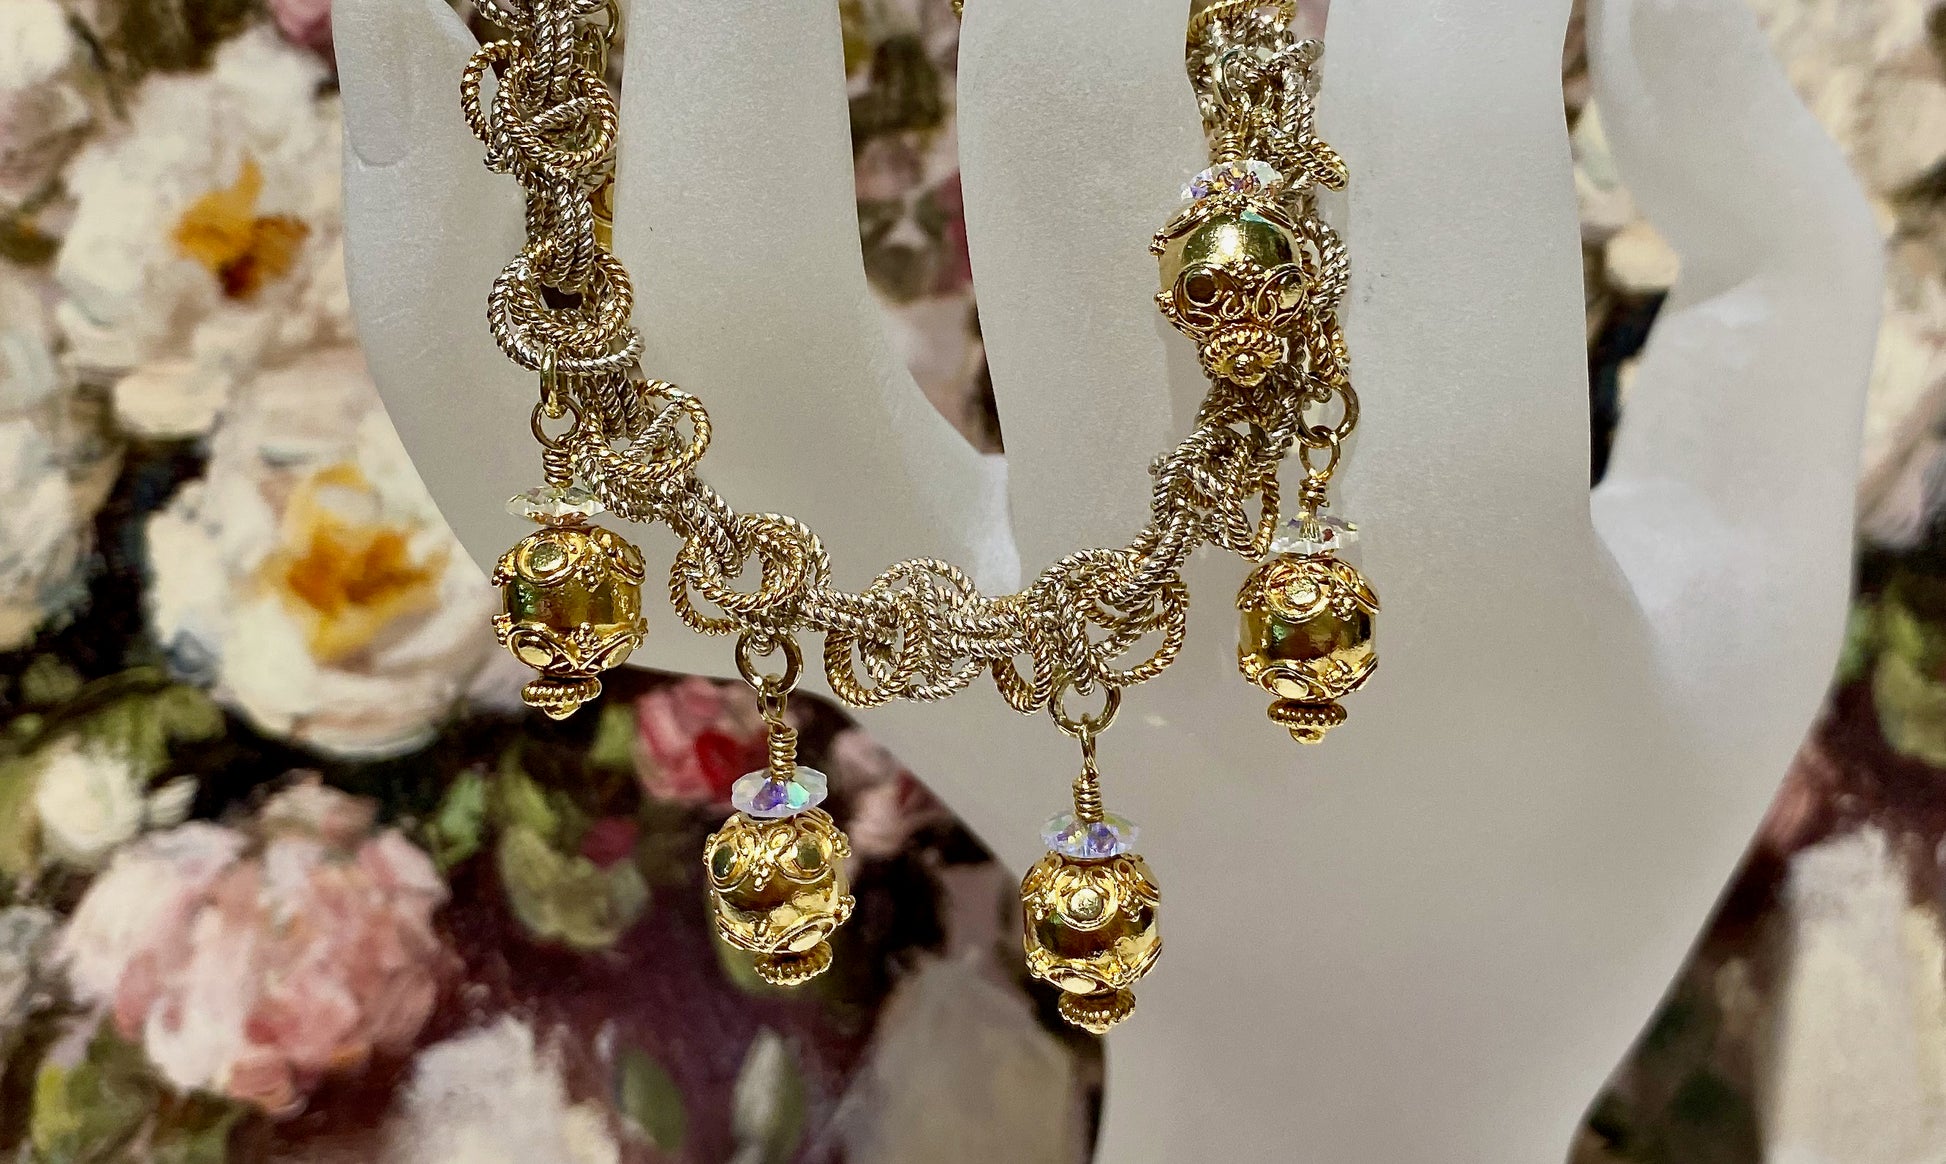 Closeup Bali Beads and Swarovski Crystal Adornments